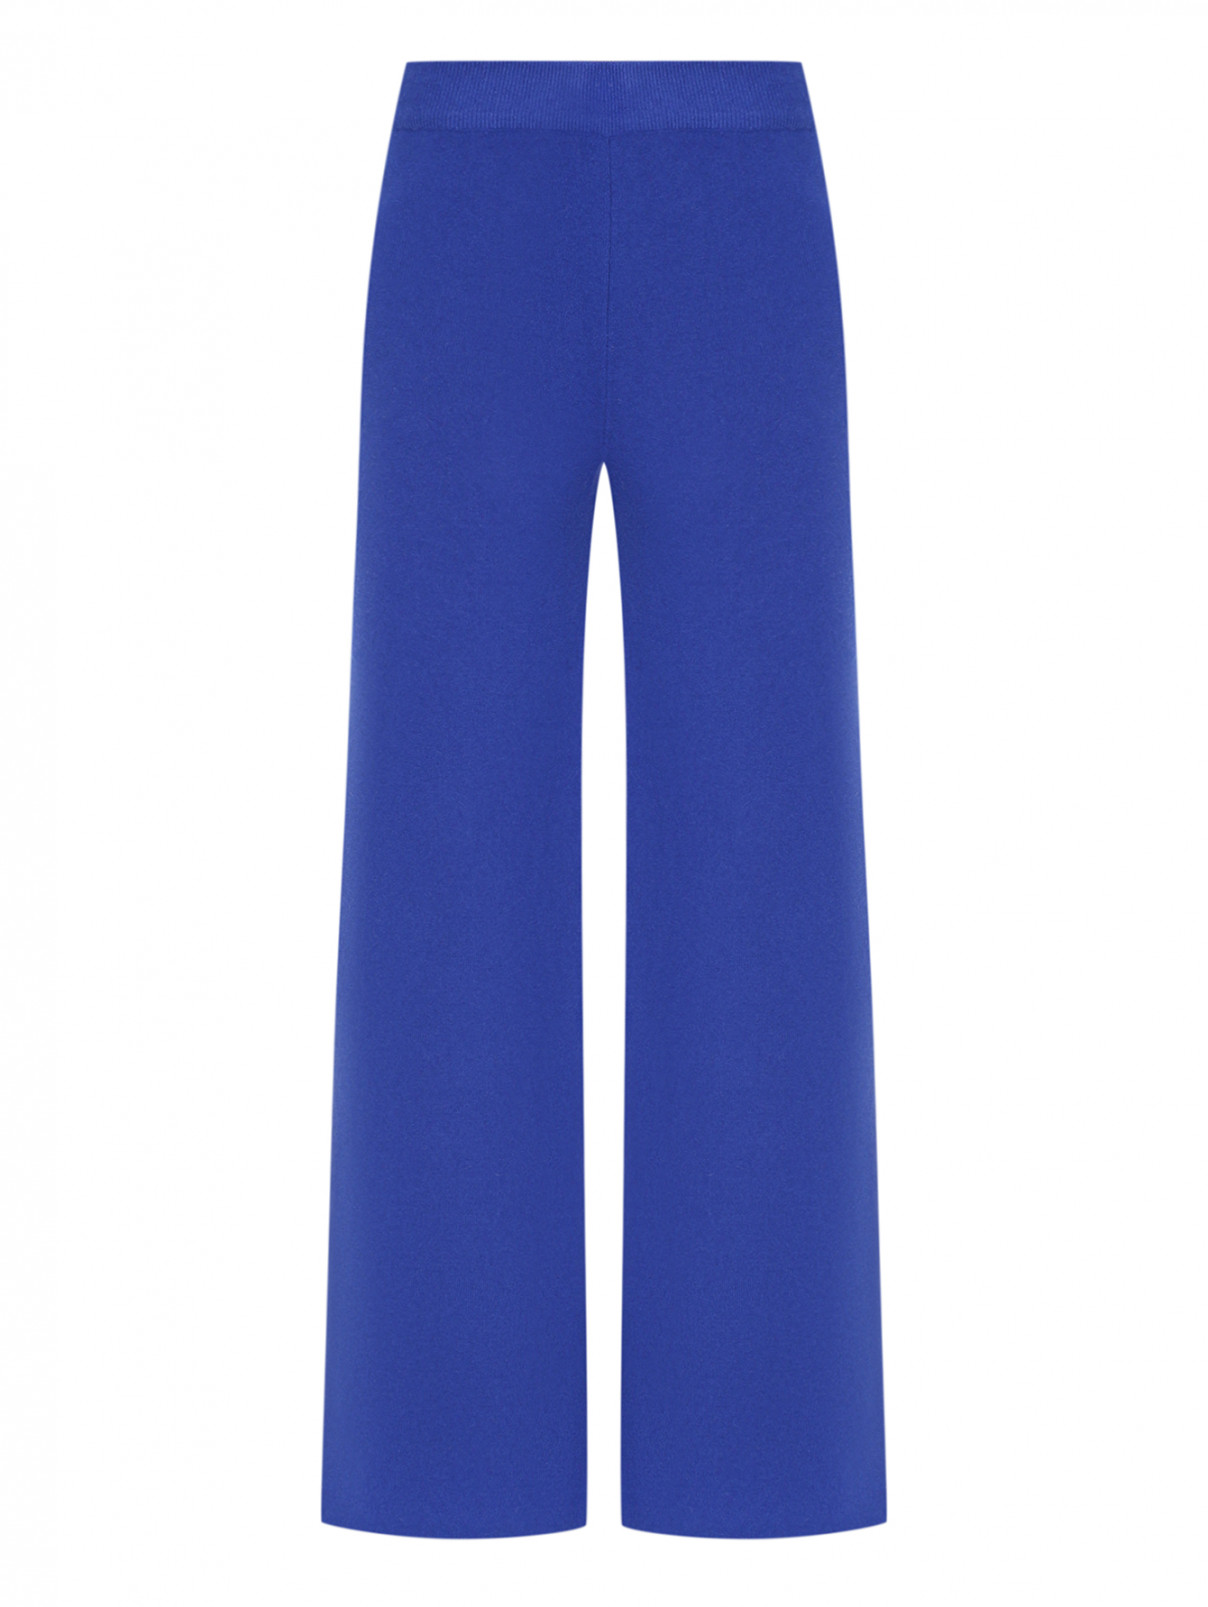 Широкие брюки на резинке из трикотажа Shade  –  Общий вид  – Цвет:  Синий